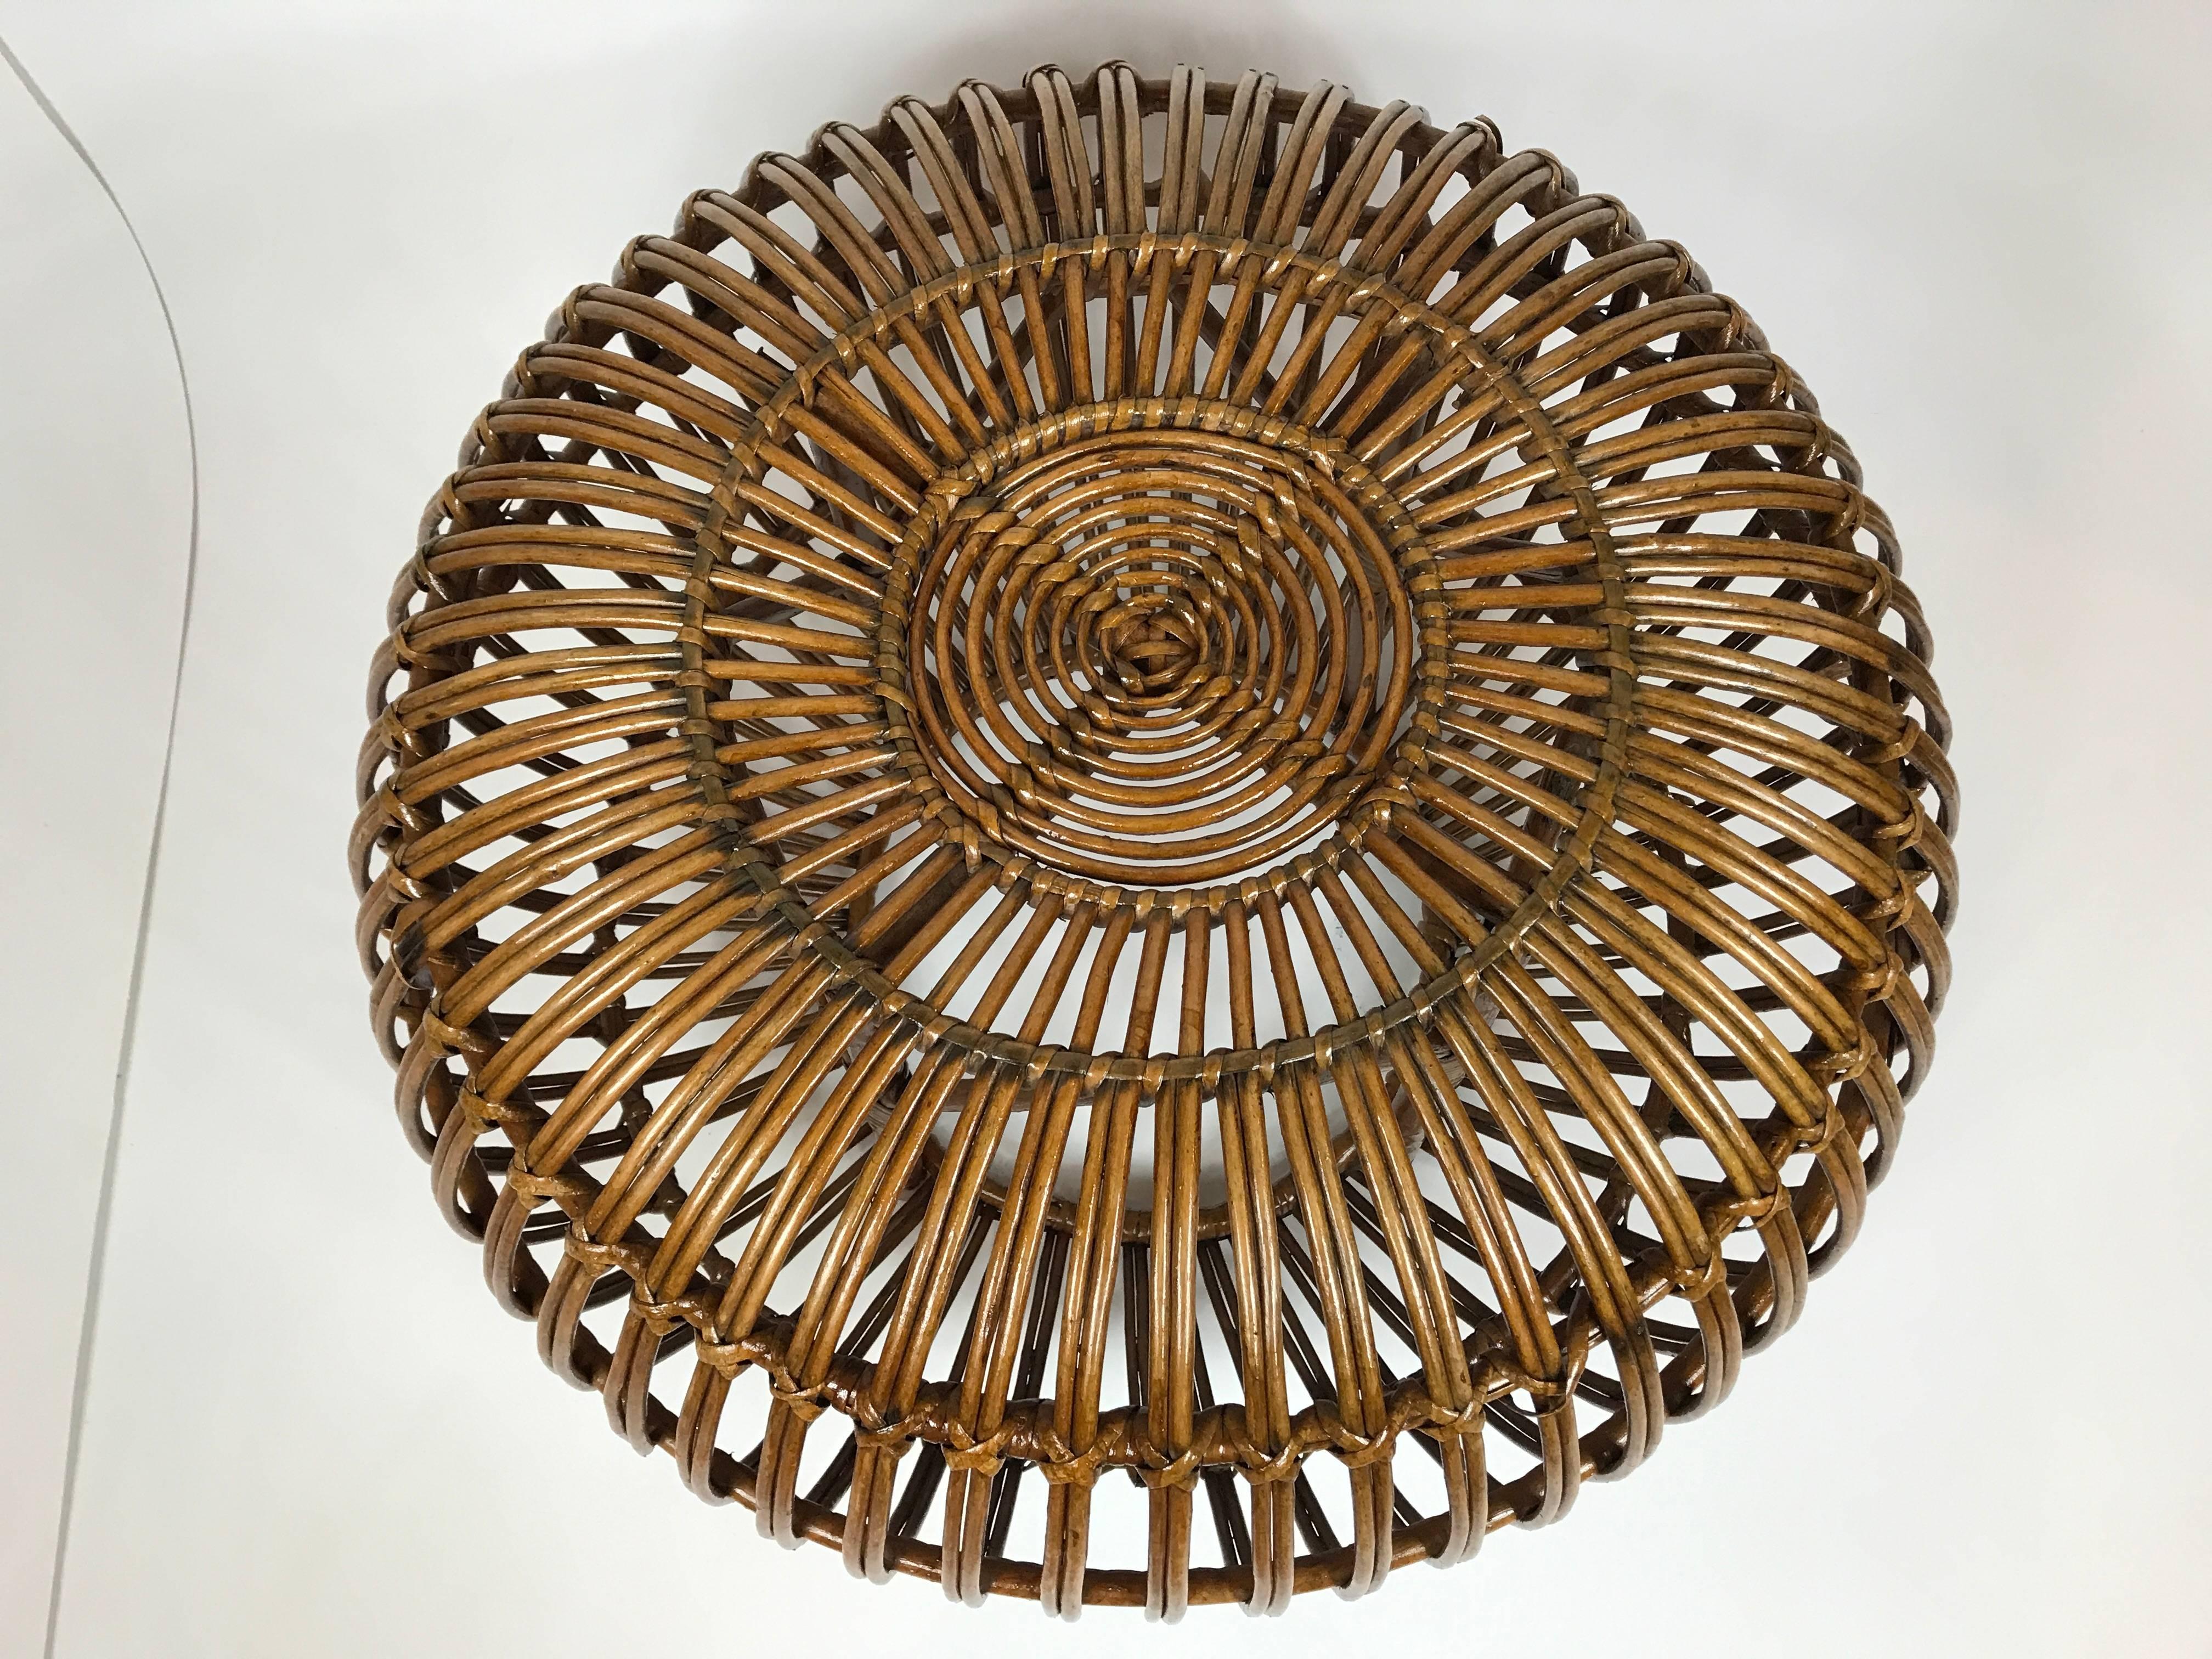 Lovely circular rattan stool by Franco Albini for Vittorio Bonacina.